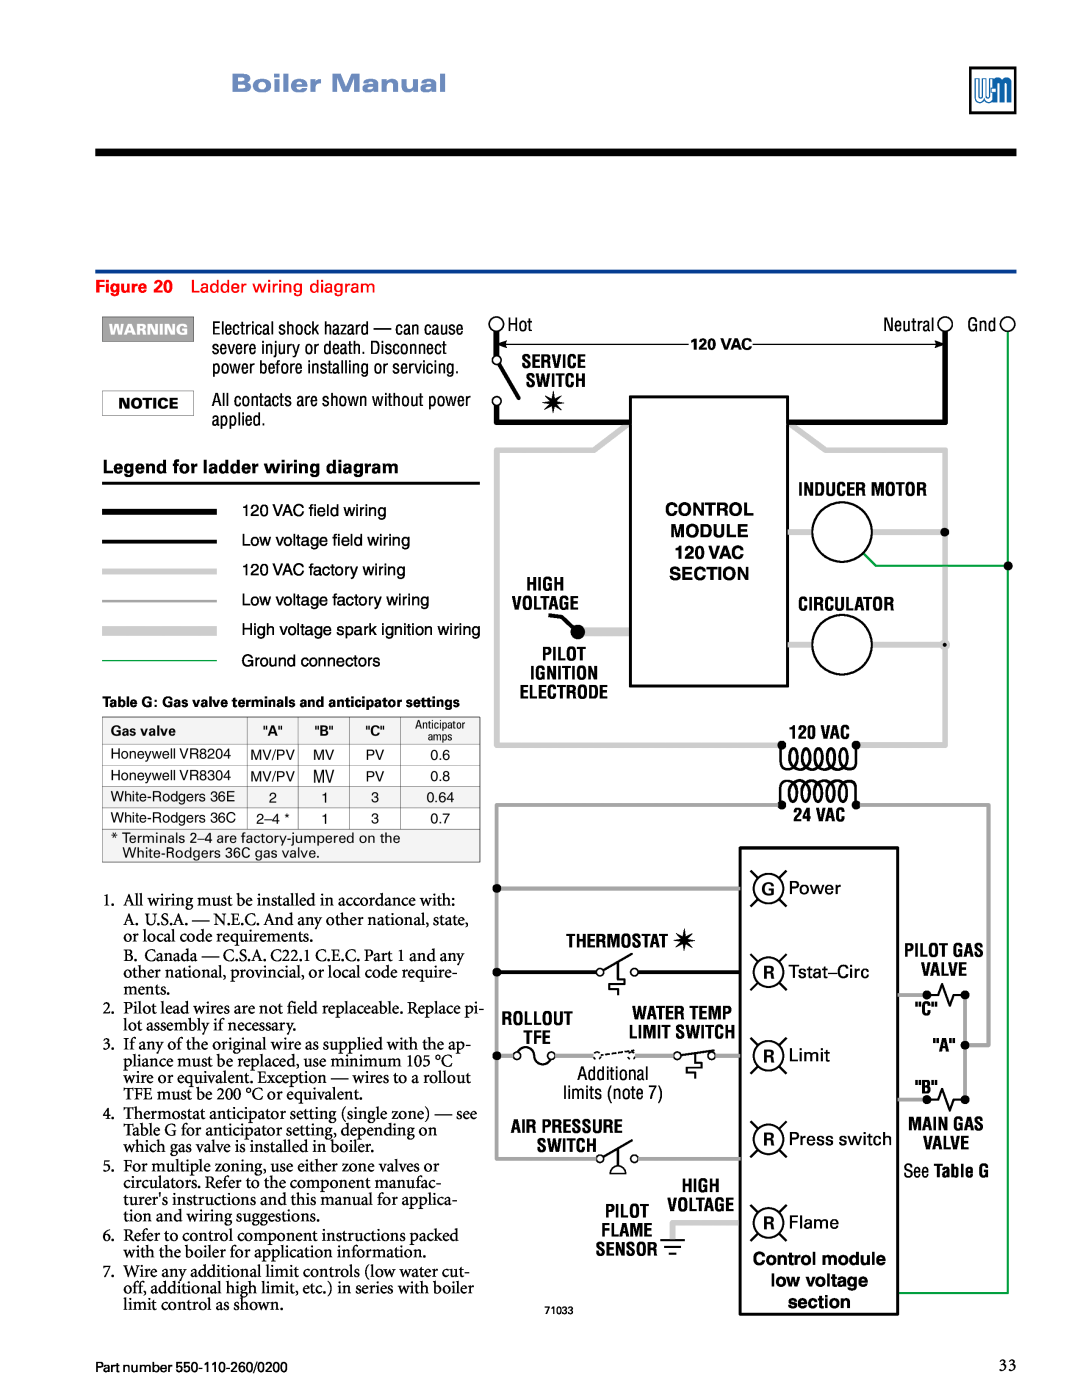 Weil-McLain 550-110-260/02002 Boiler Manual, Legend for ladder wiring diagram, G Power, R Tstat–Circ, R Limit, R Flame 